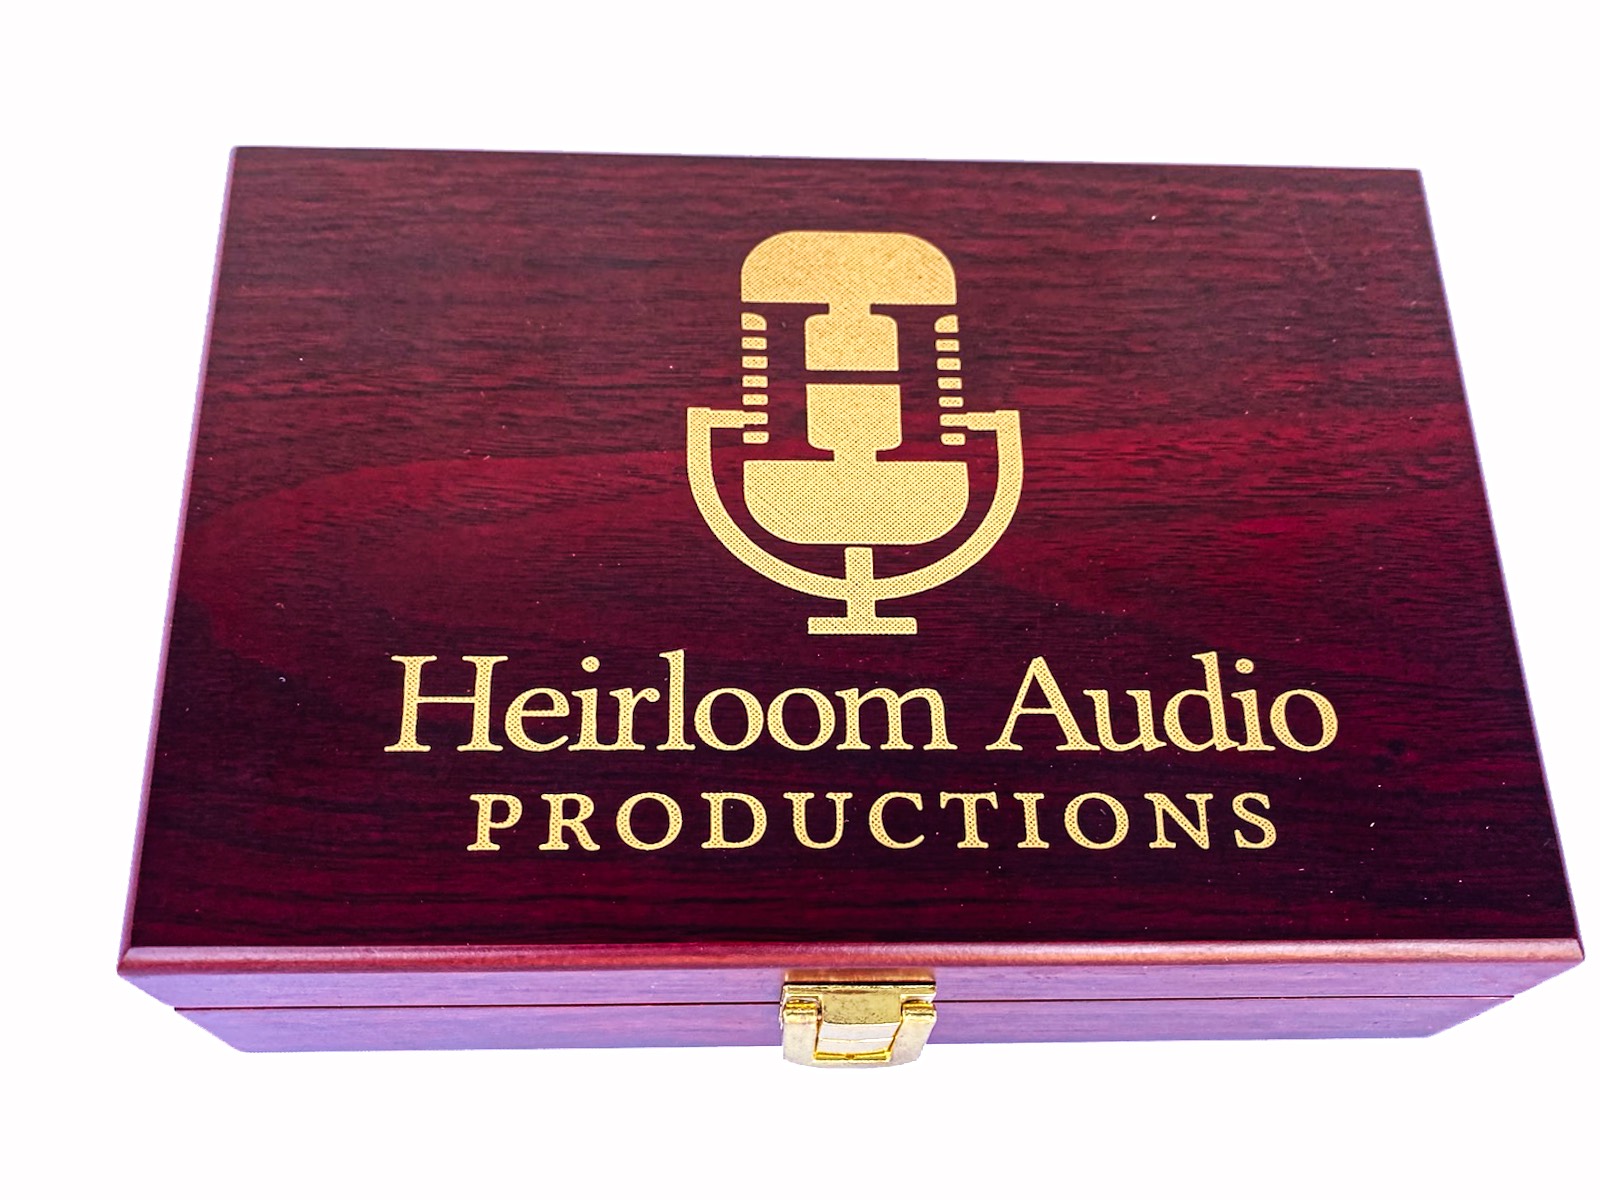 Heirloom Audio Productions